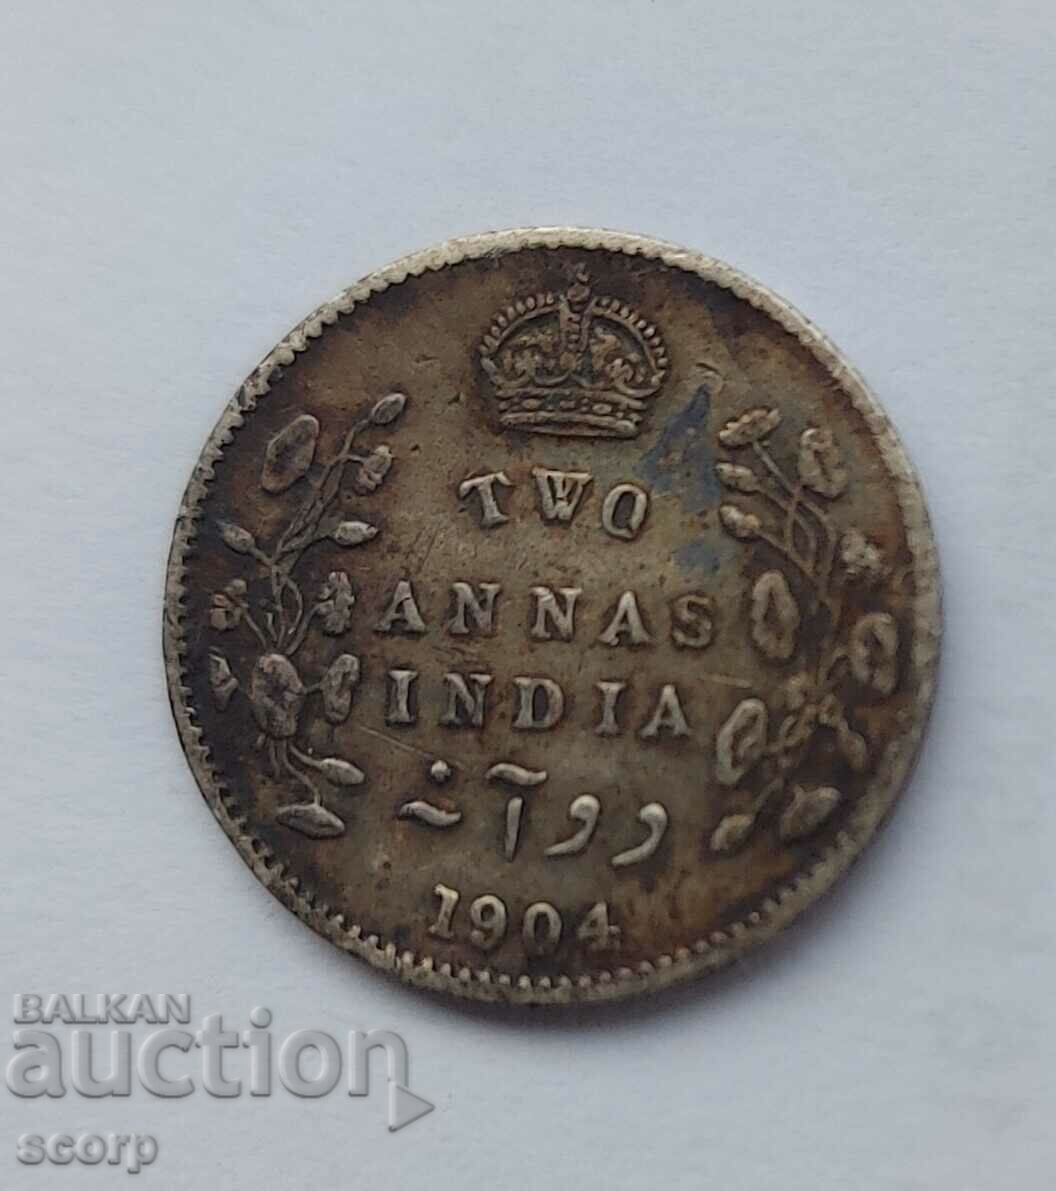 120 Indian small coin - 2 annas